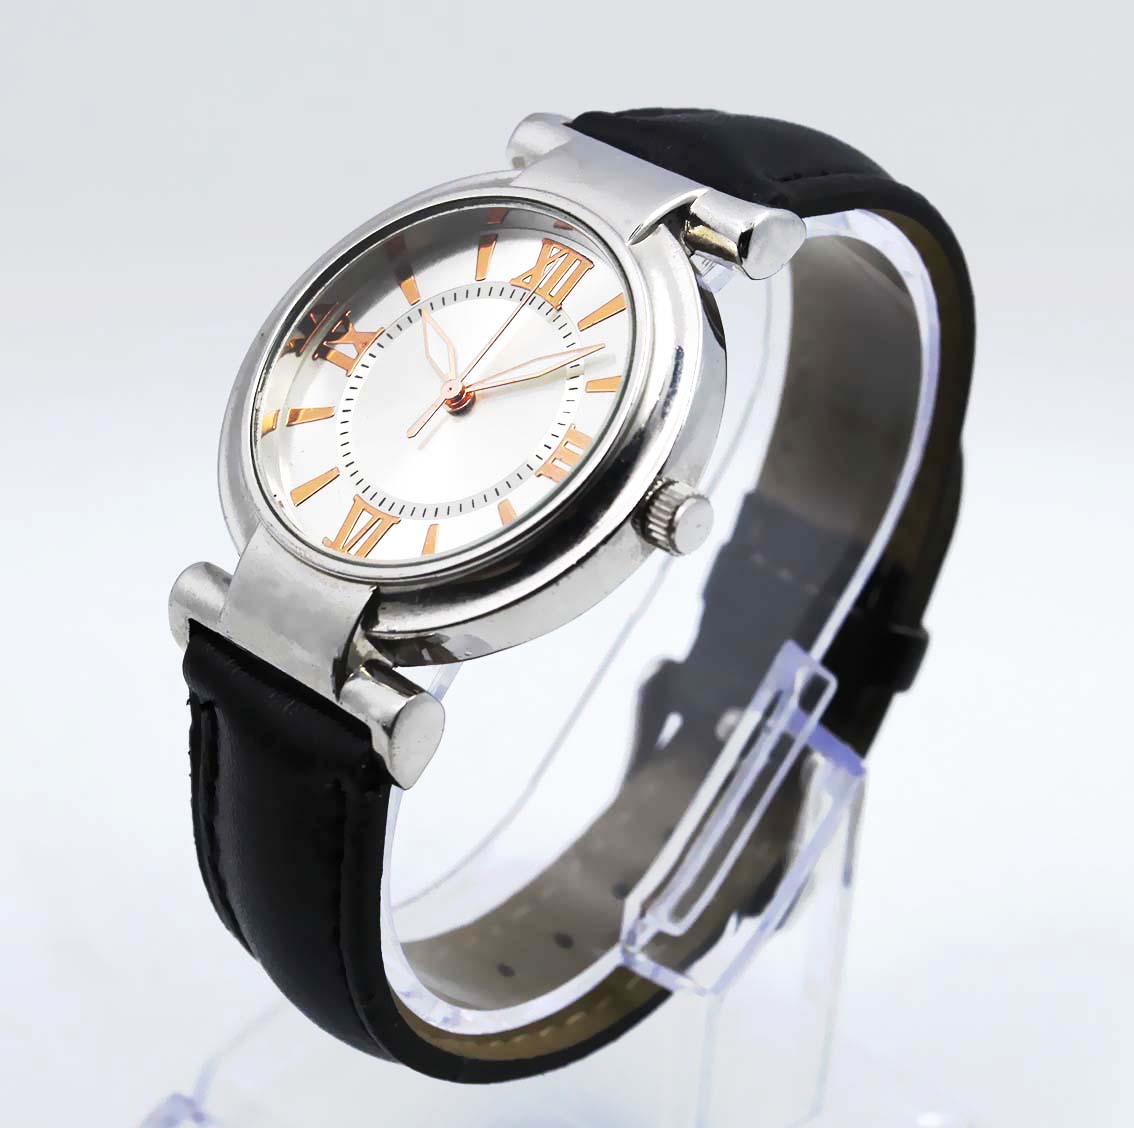 #02133Men's wristwatch quartz analog leather strap watch